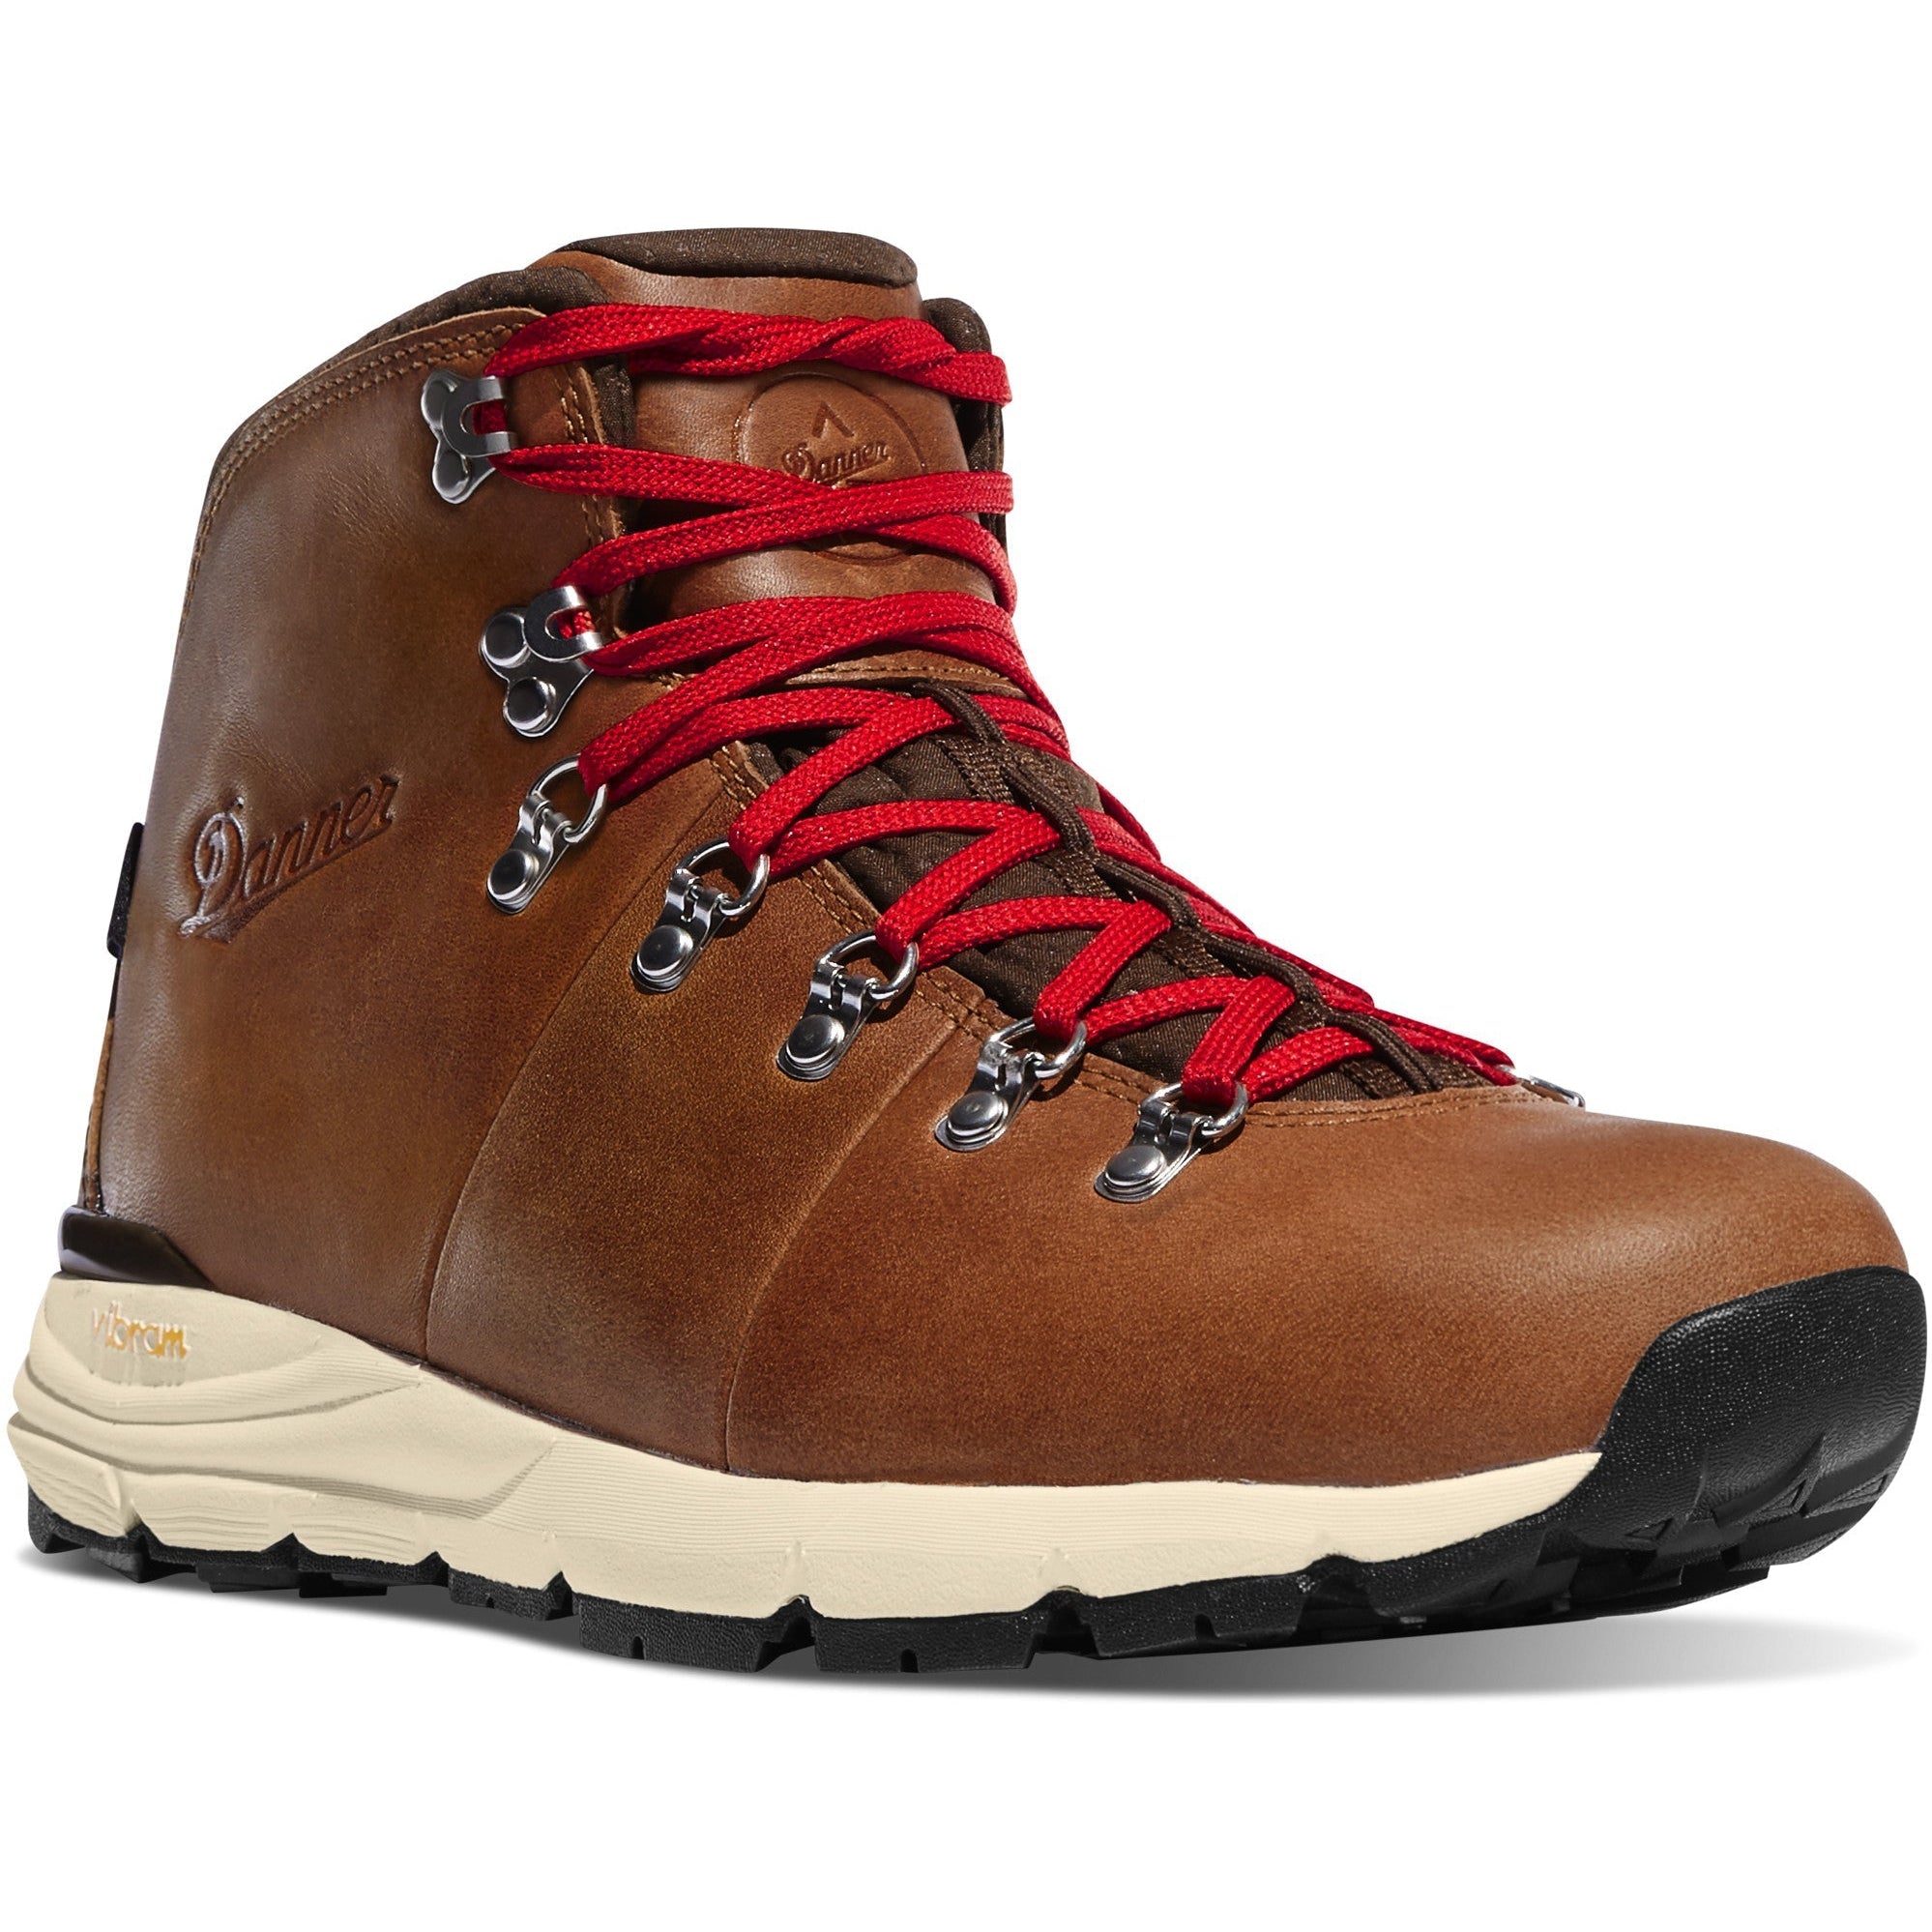 Danner Men's Mountain 600 4.5" WP Hiking Boot - Saddle Tan - 62246 6 / Medium / Tan - Overlook Boots